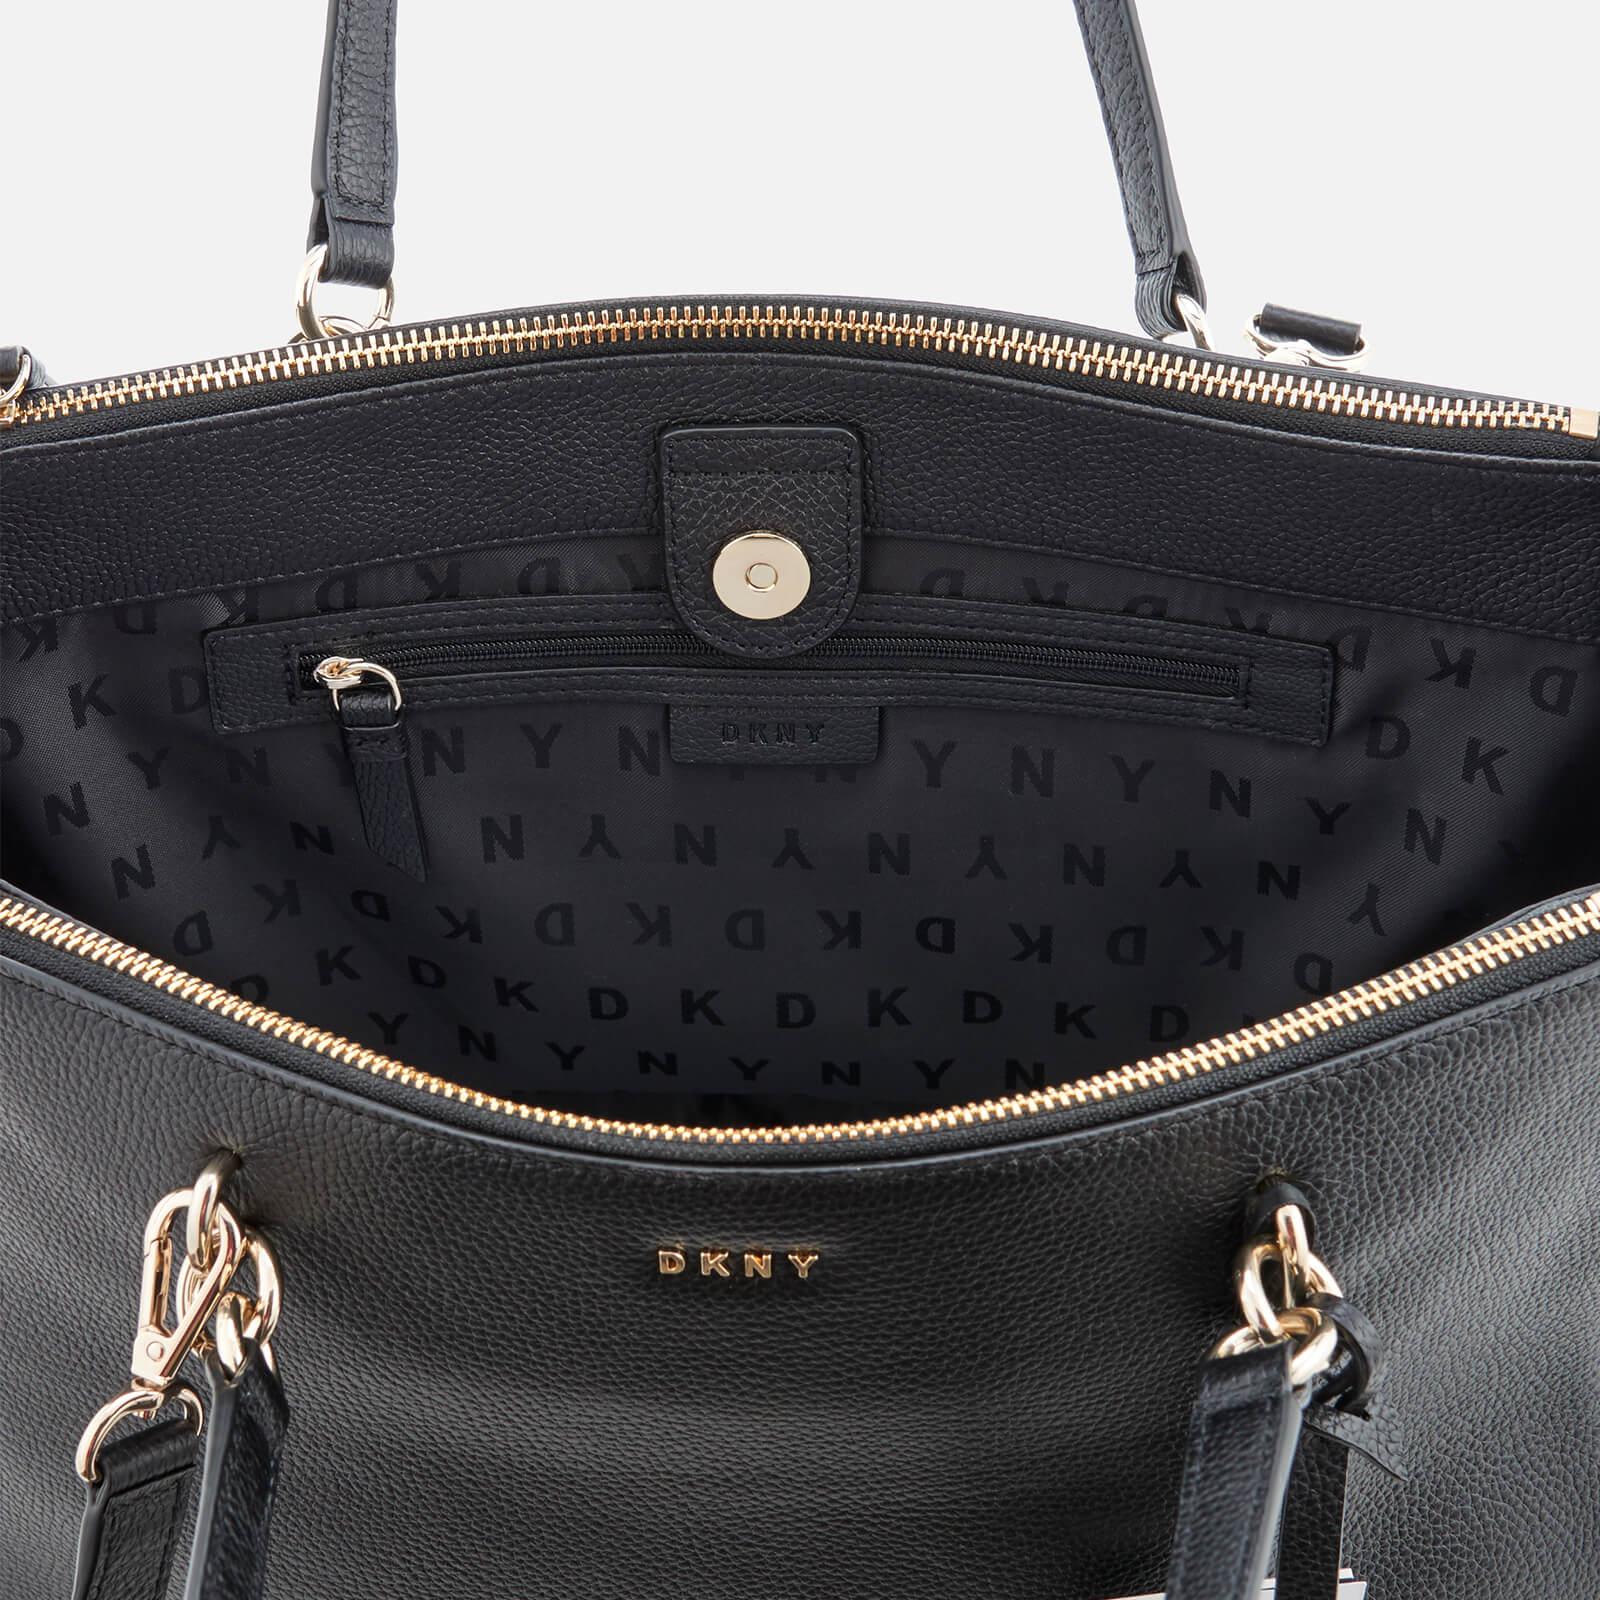 Lyst - DKNY Chelsea Pebbled Leather Large Shopper Bag in Black